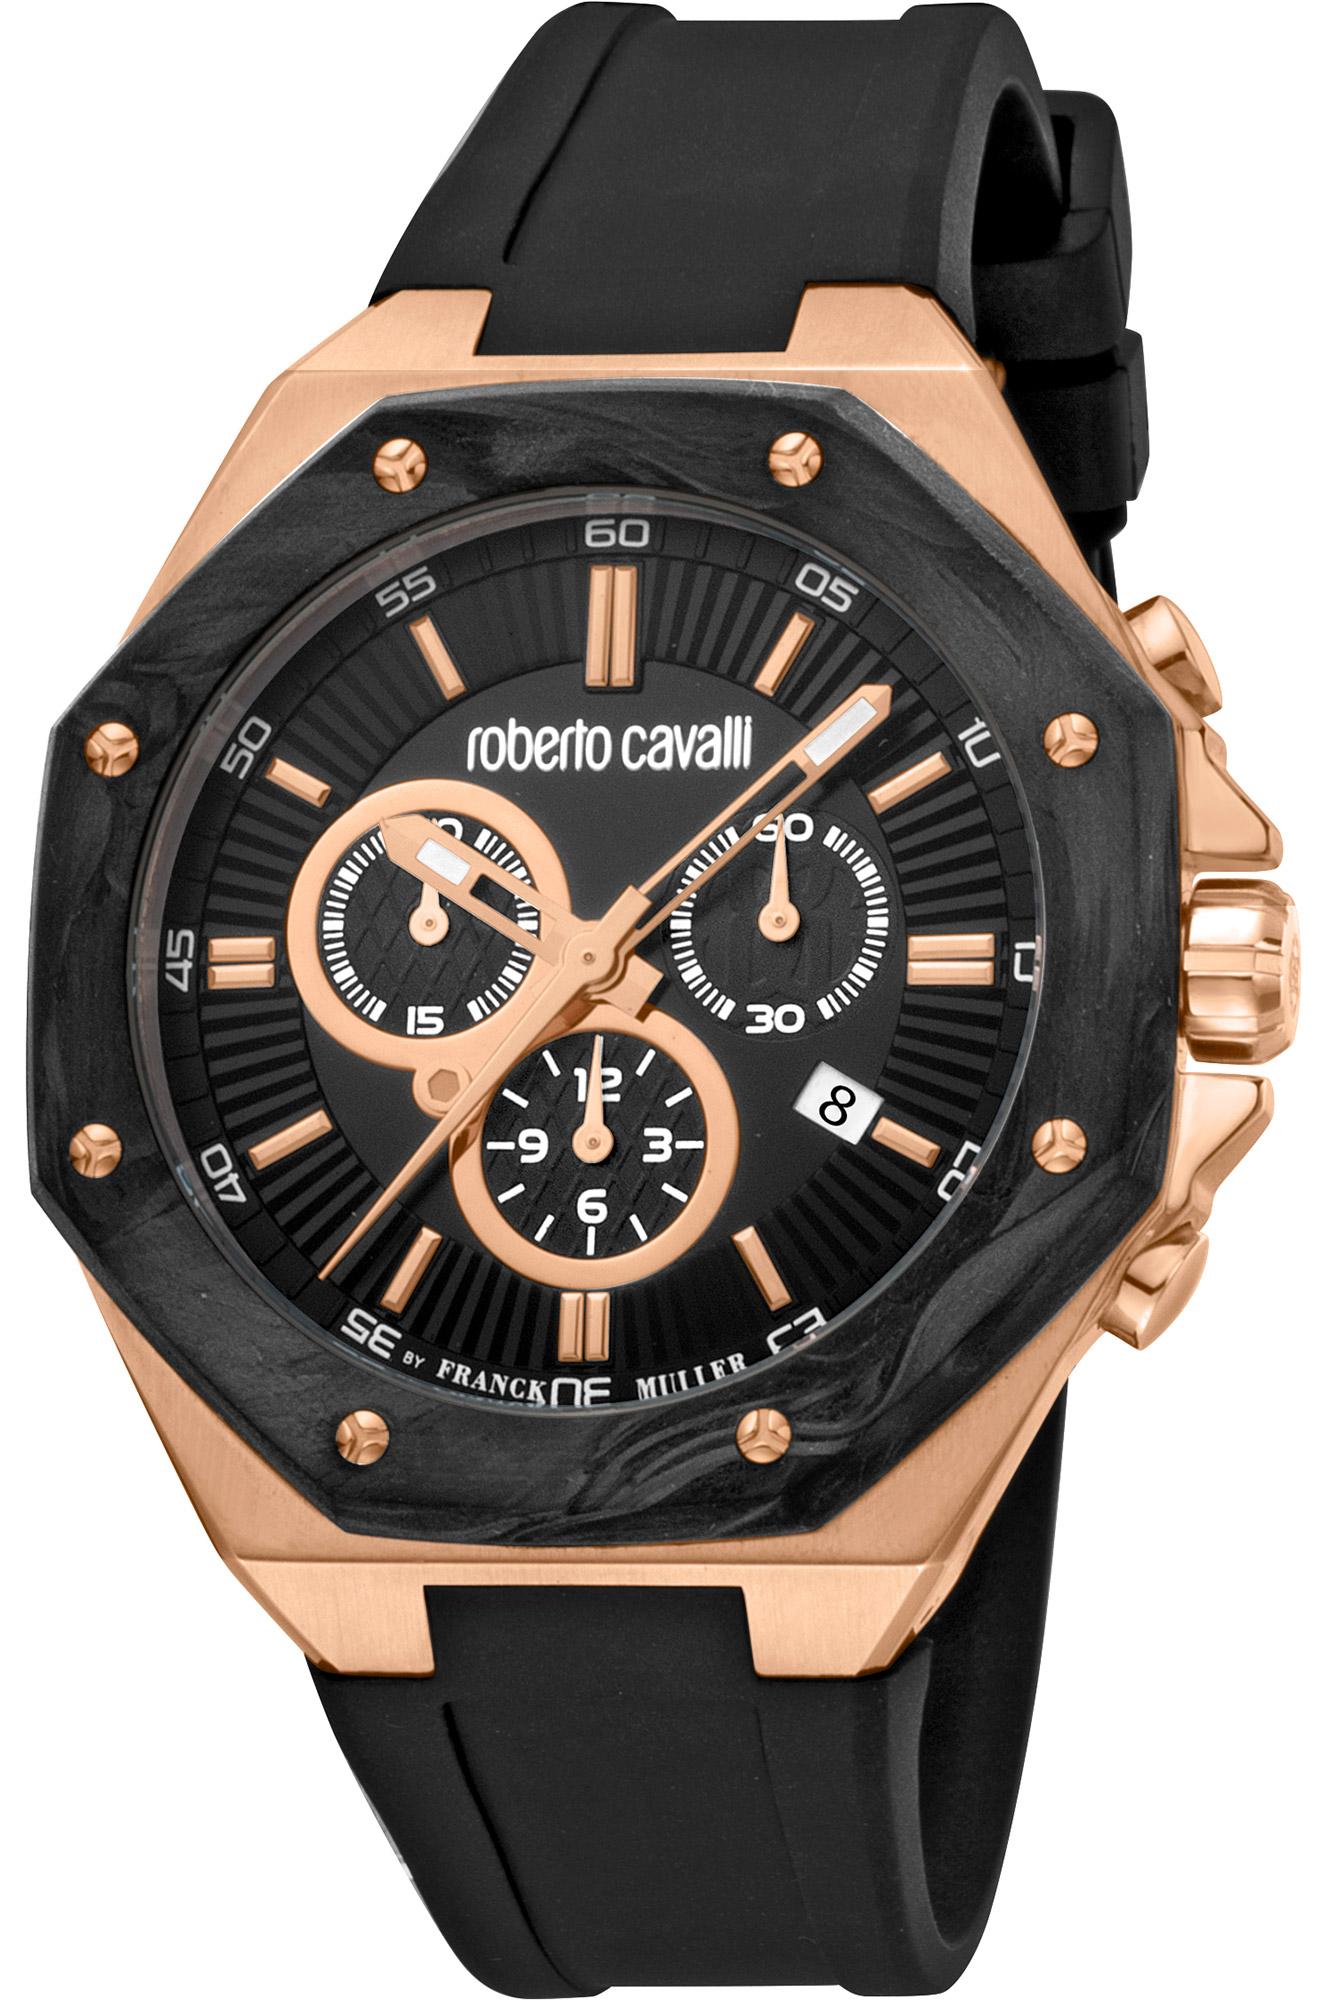 Watch Roberto Cavalli by Franck Muller rv1g123p1021